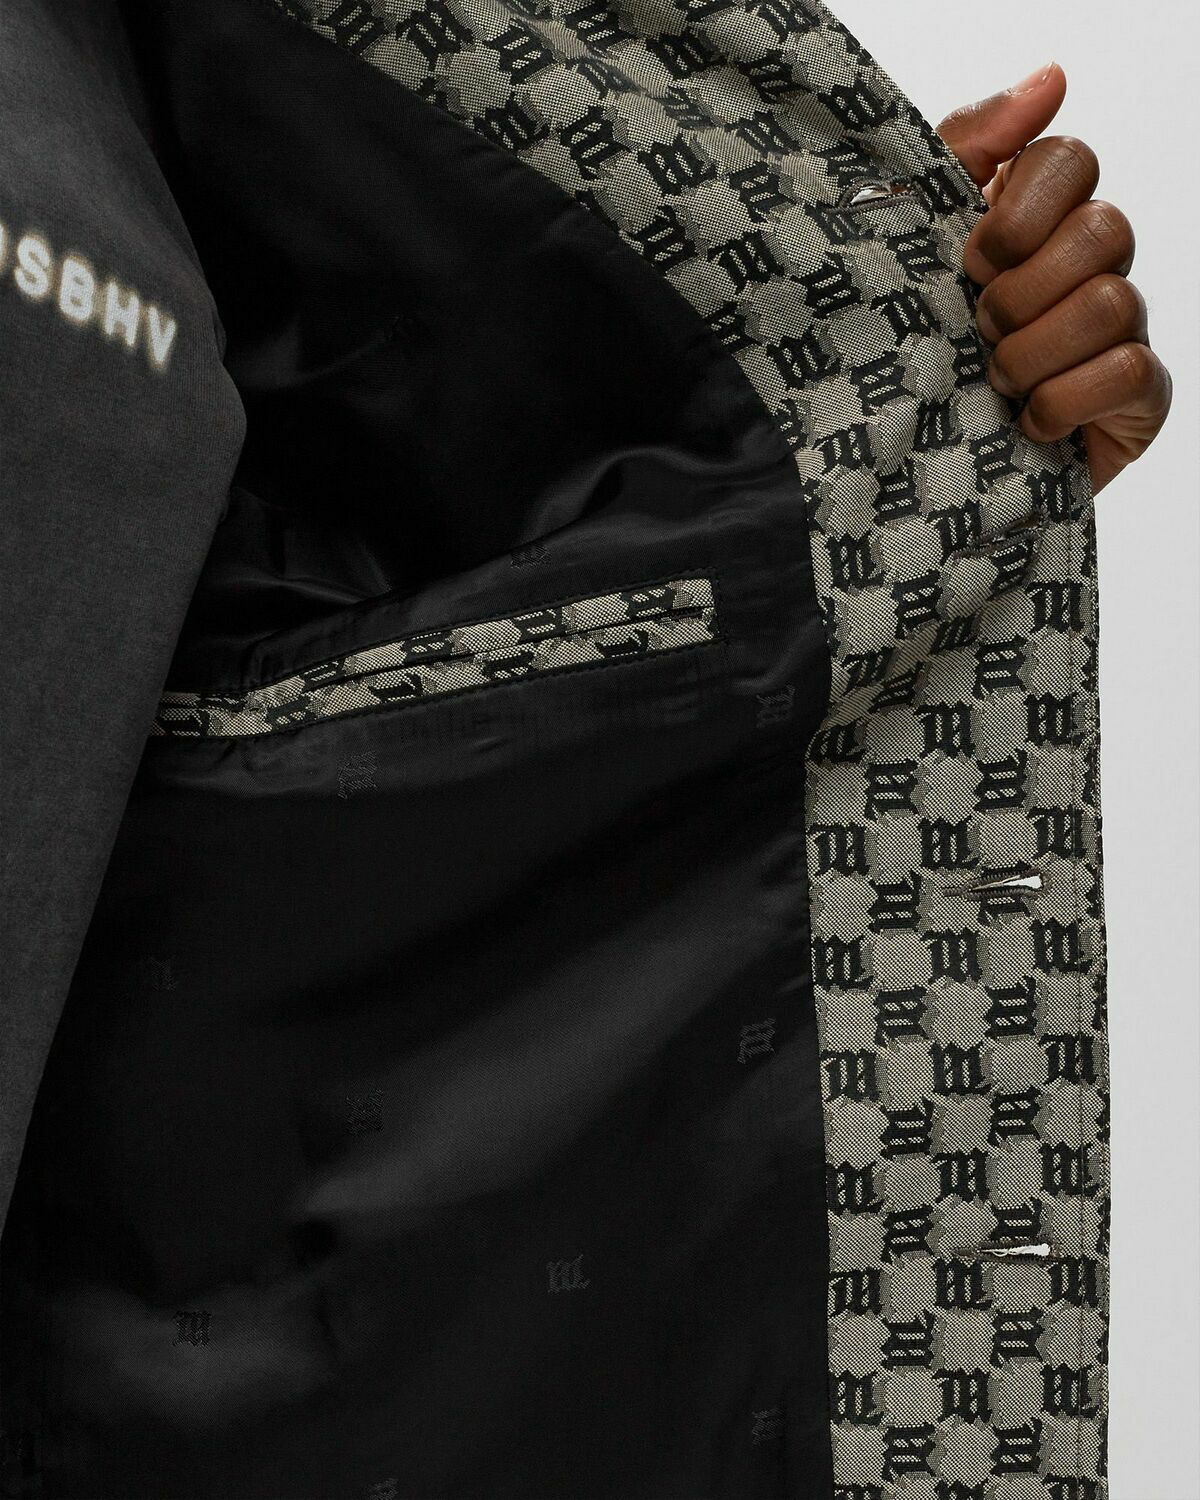 Balenciaga | Women Monogram Jacquard Nylon Puffer Jacket Black 34